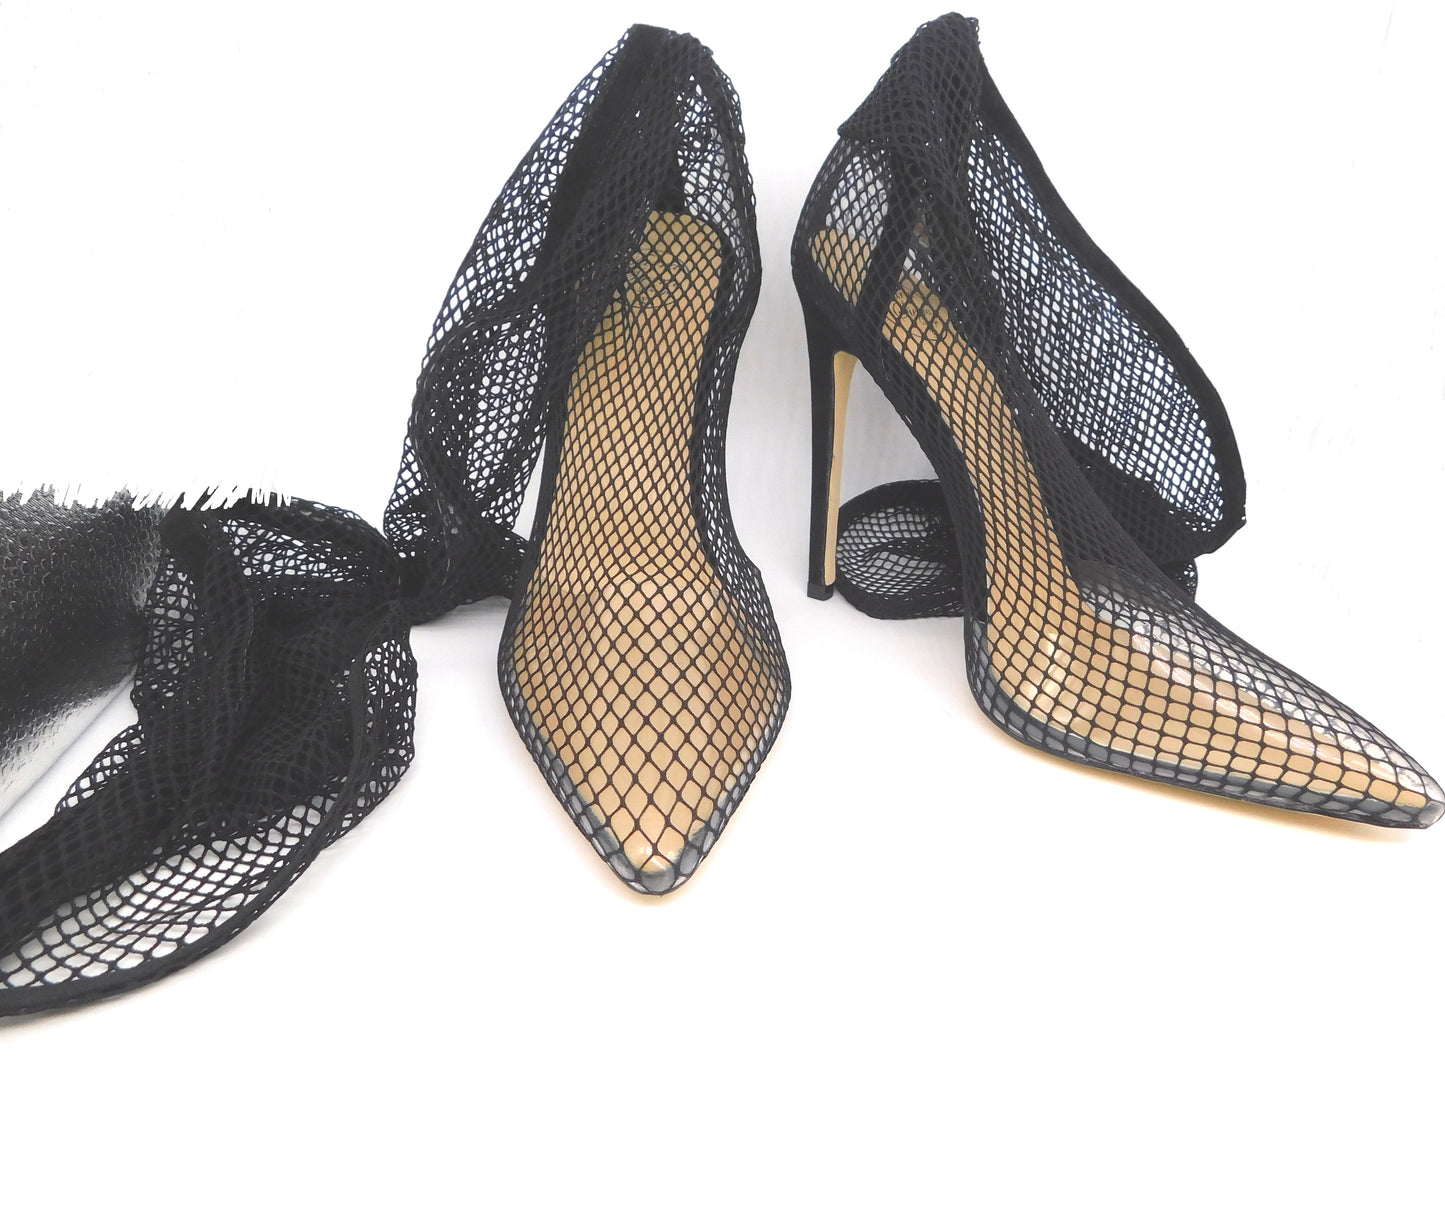 Black Fishnet Heels